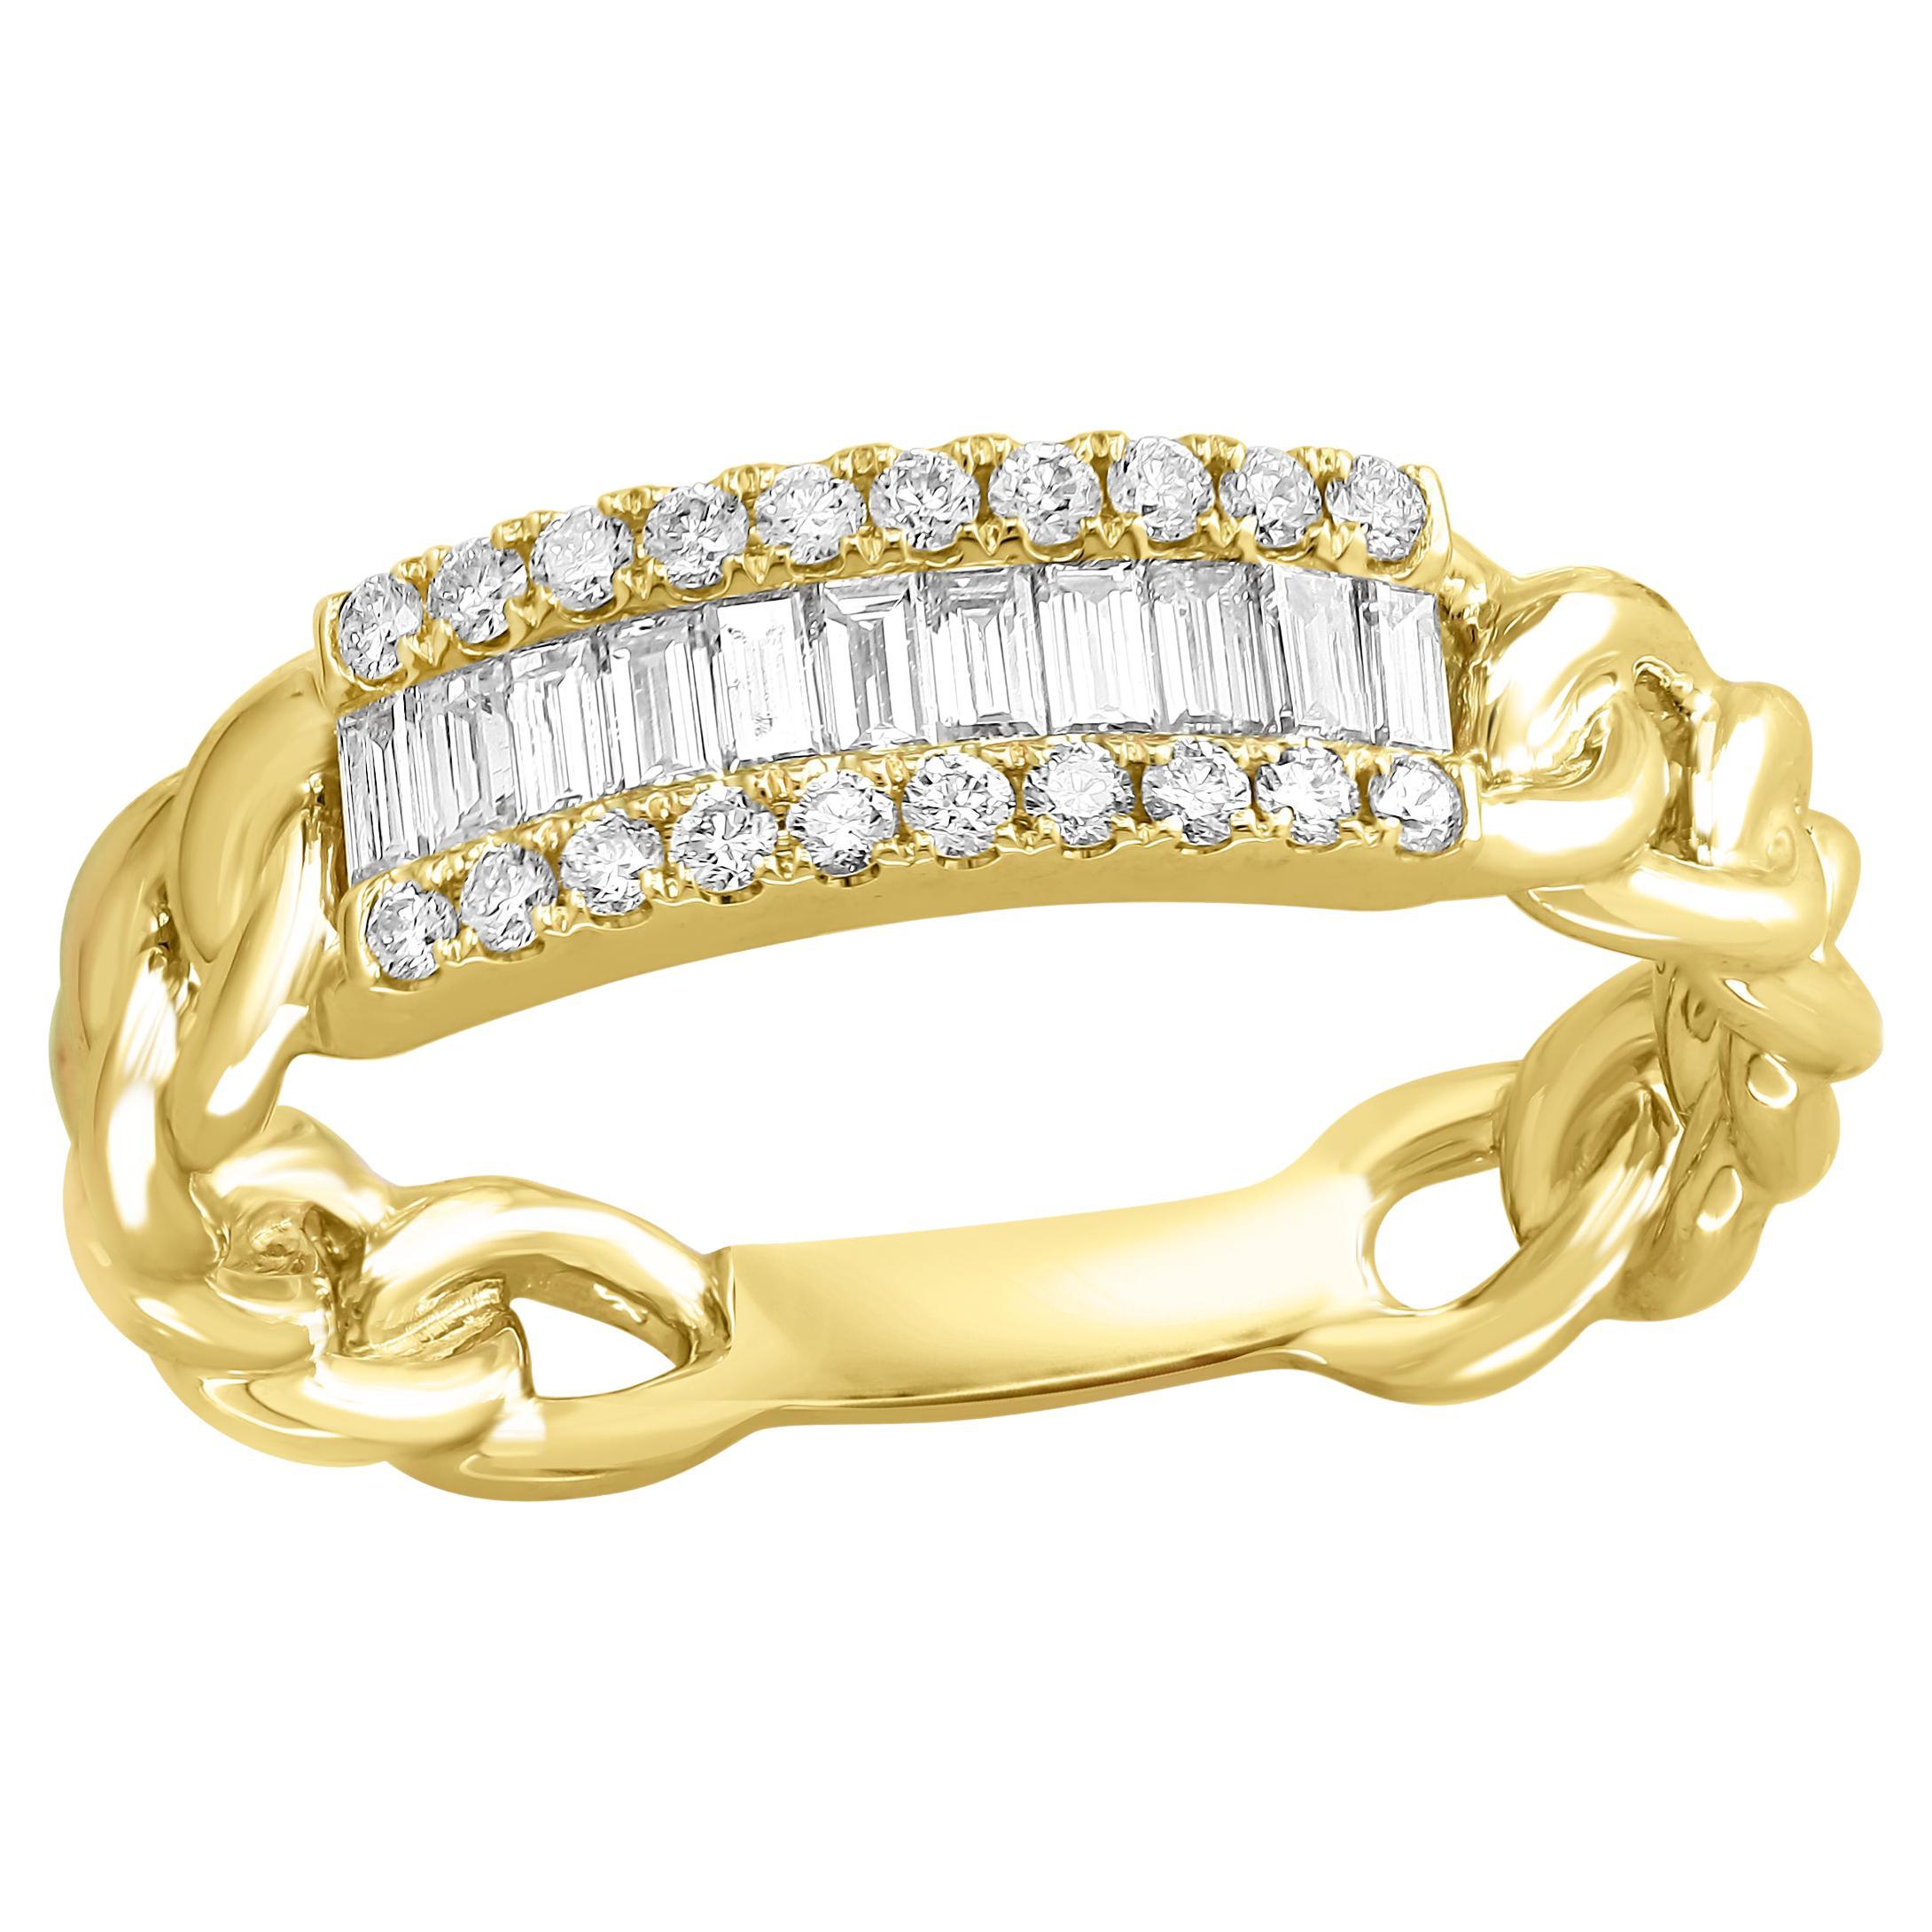 0.41 Carat Baguette Diamond Fashion Ring in 18K Yellow Gold